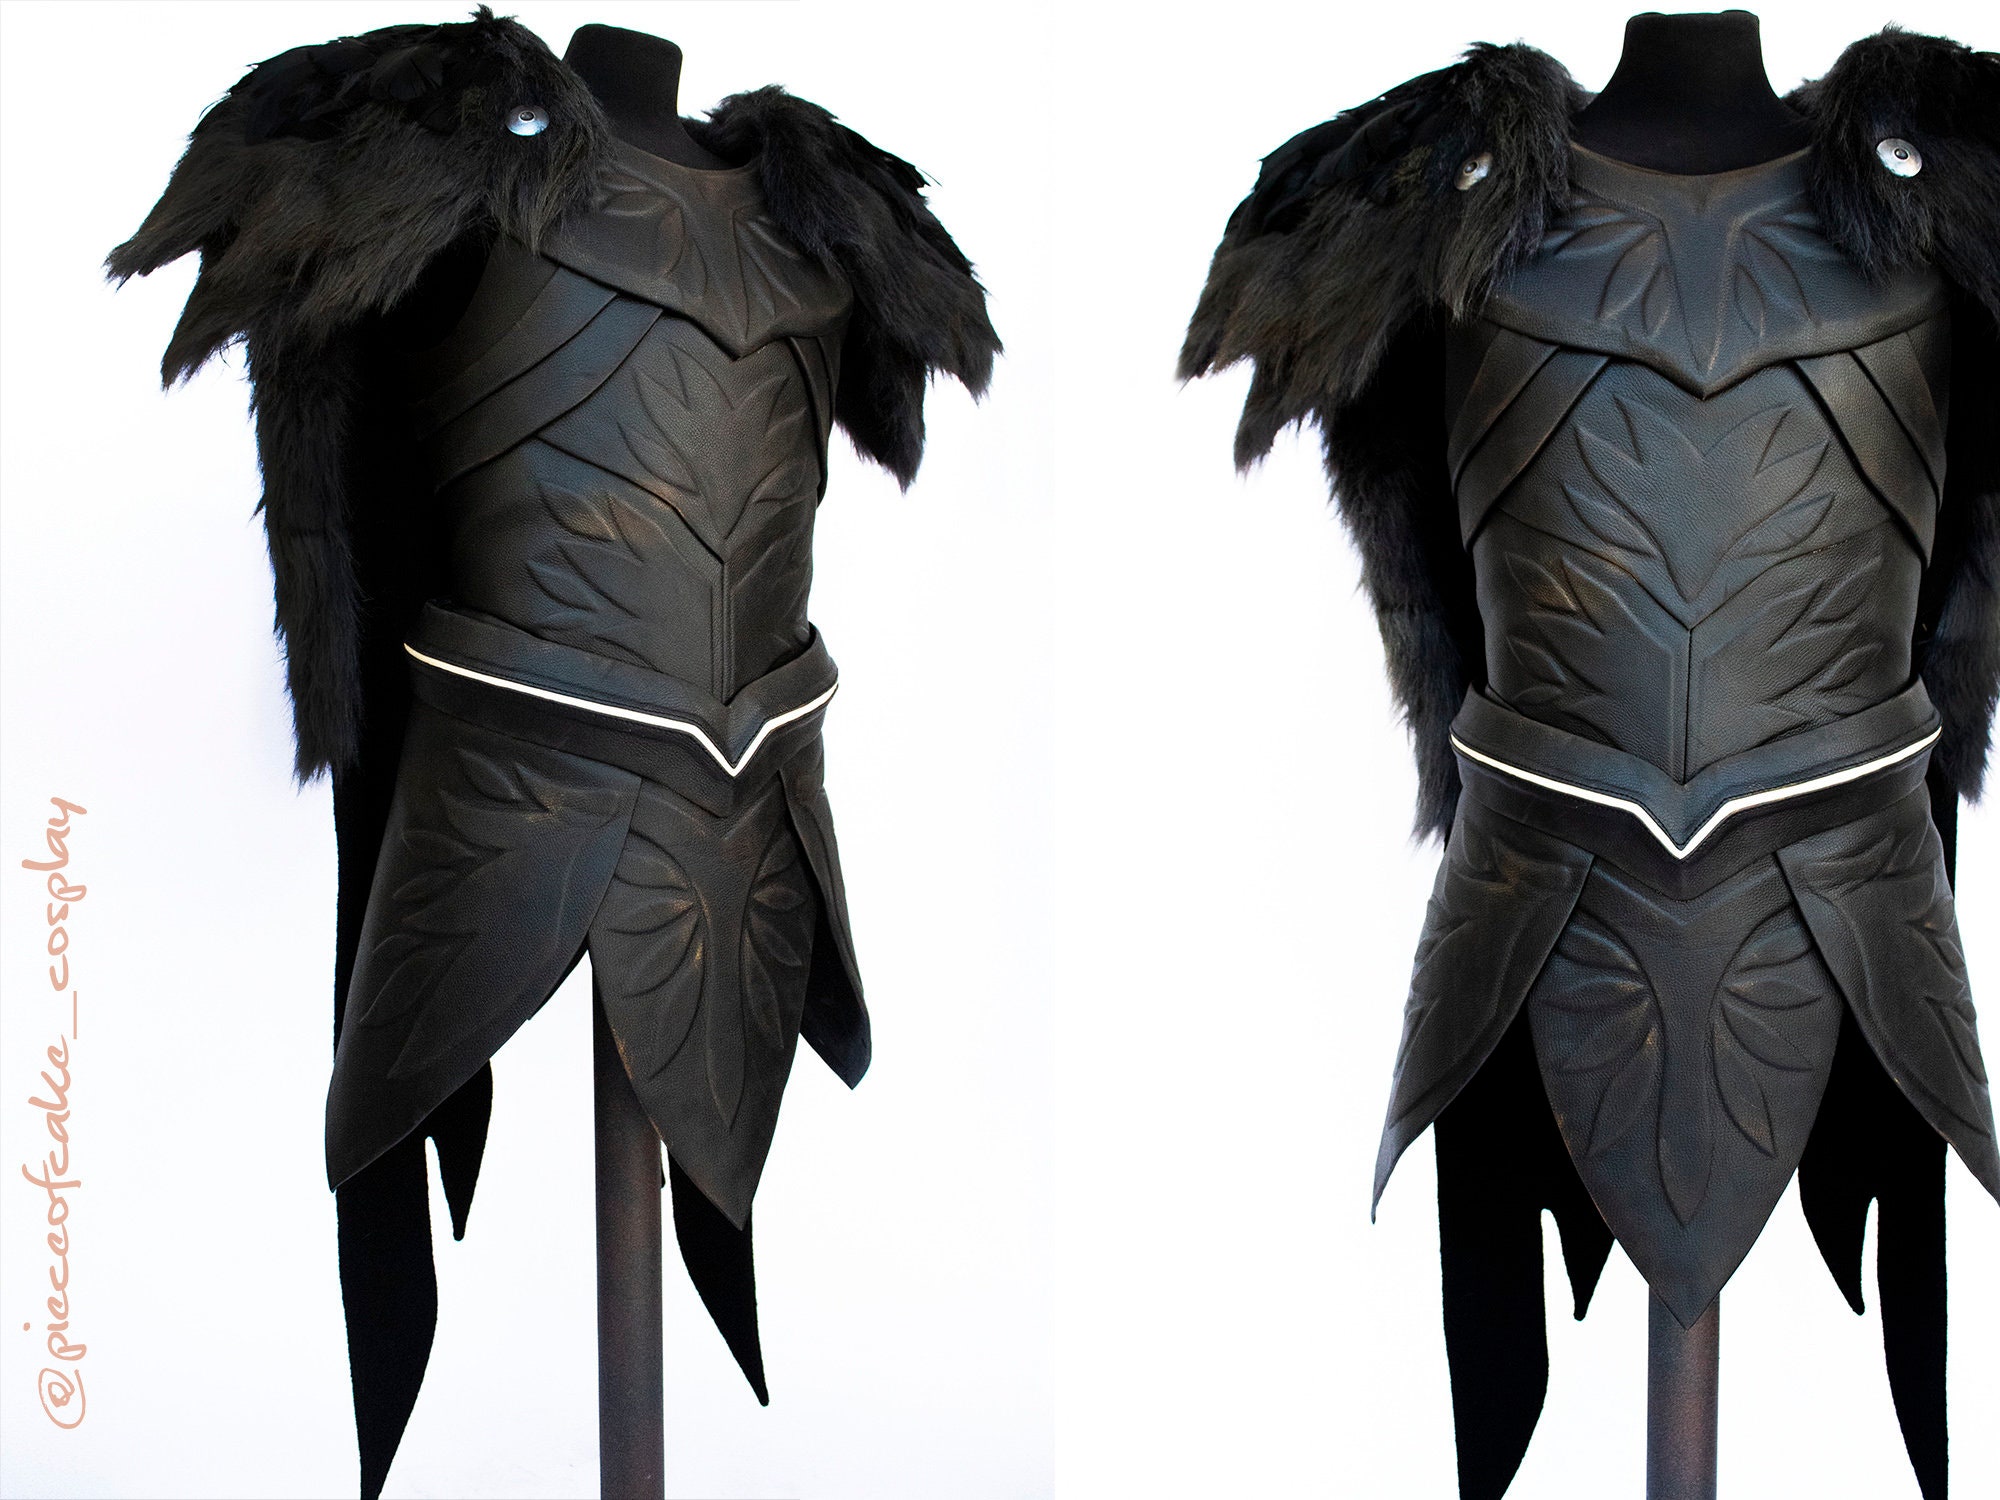 Vax'ildan from Legend of Vox Machina Costume, Carbon Costume